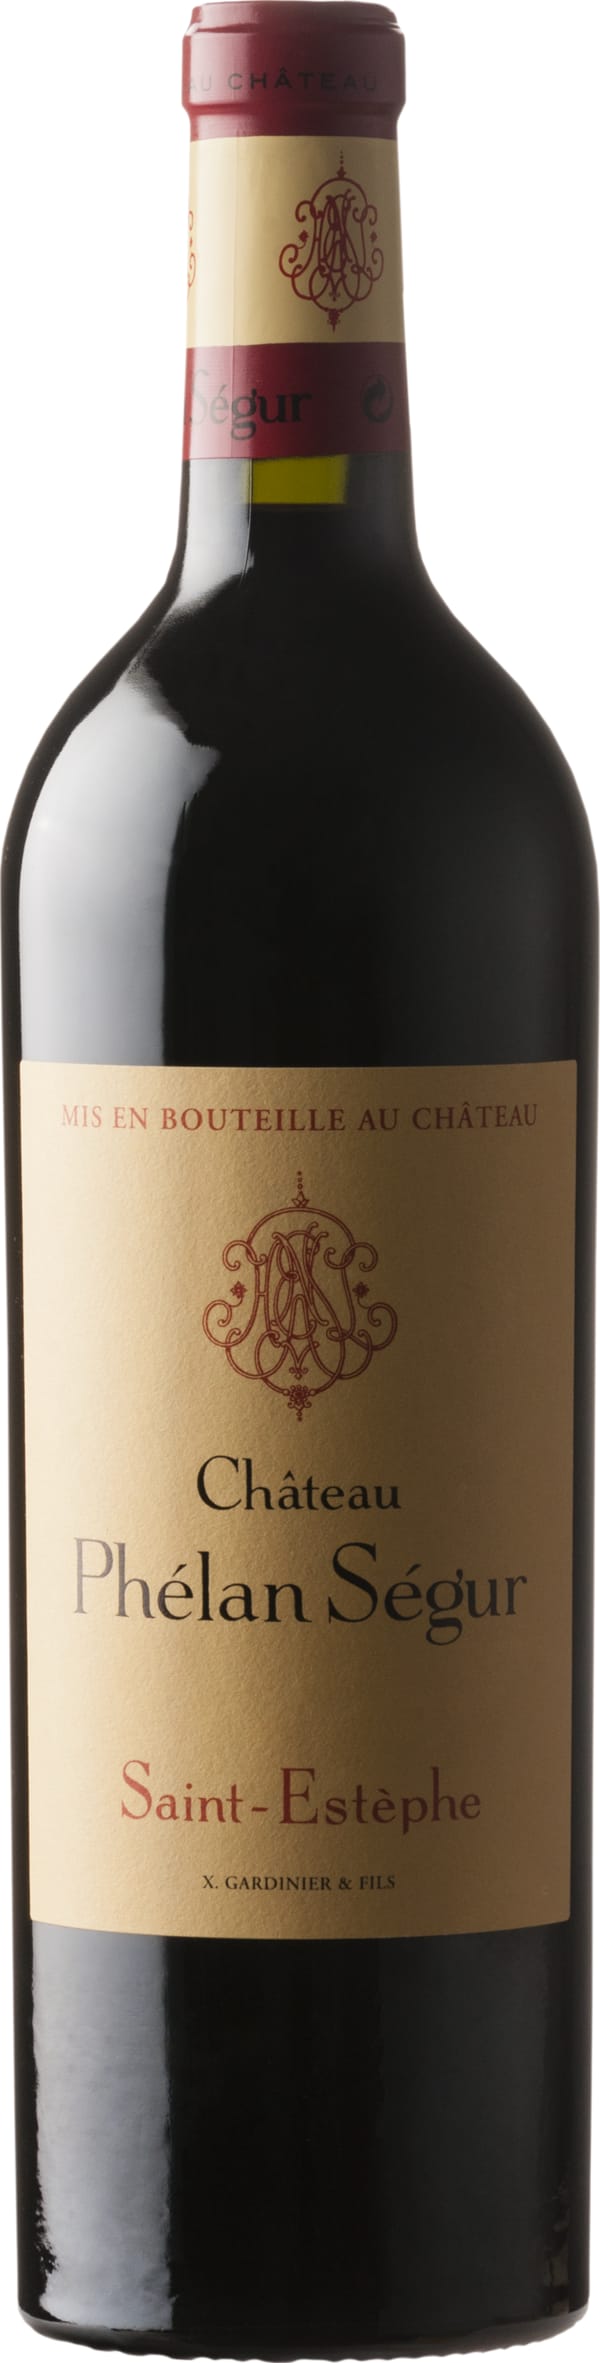 Chateau Phelan Segur Saint-Estephe 2018 6x75cl - Just Wines 